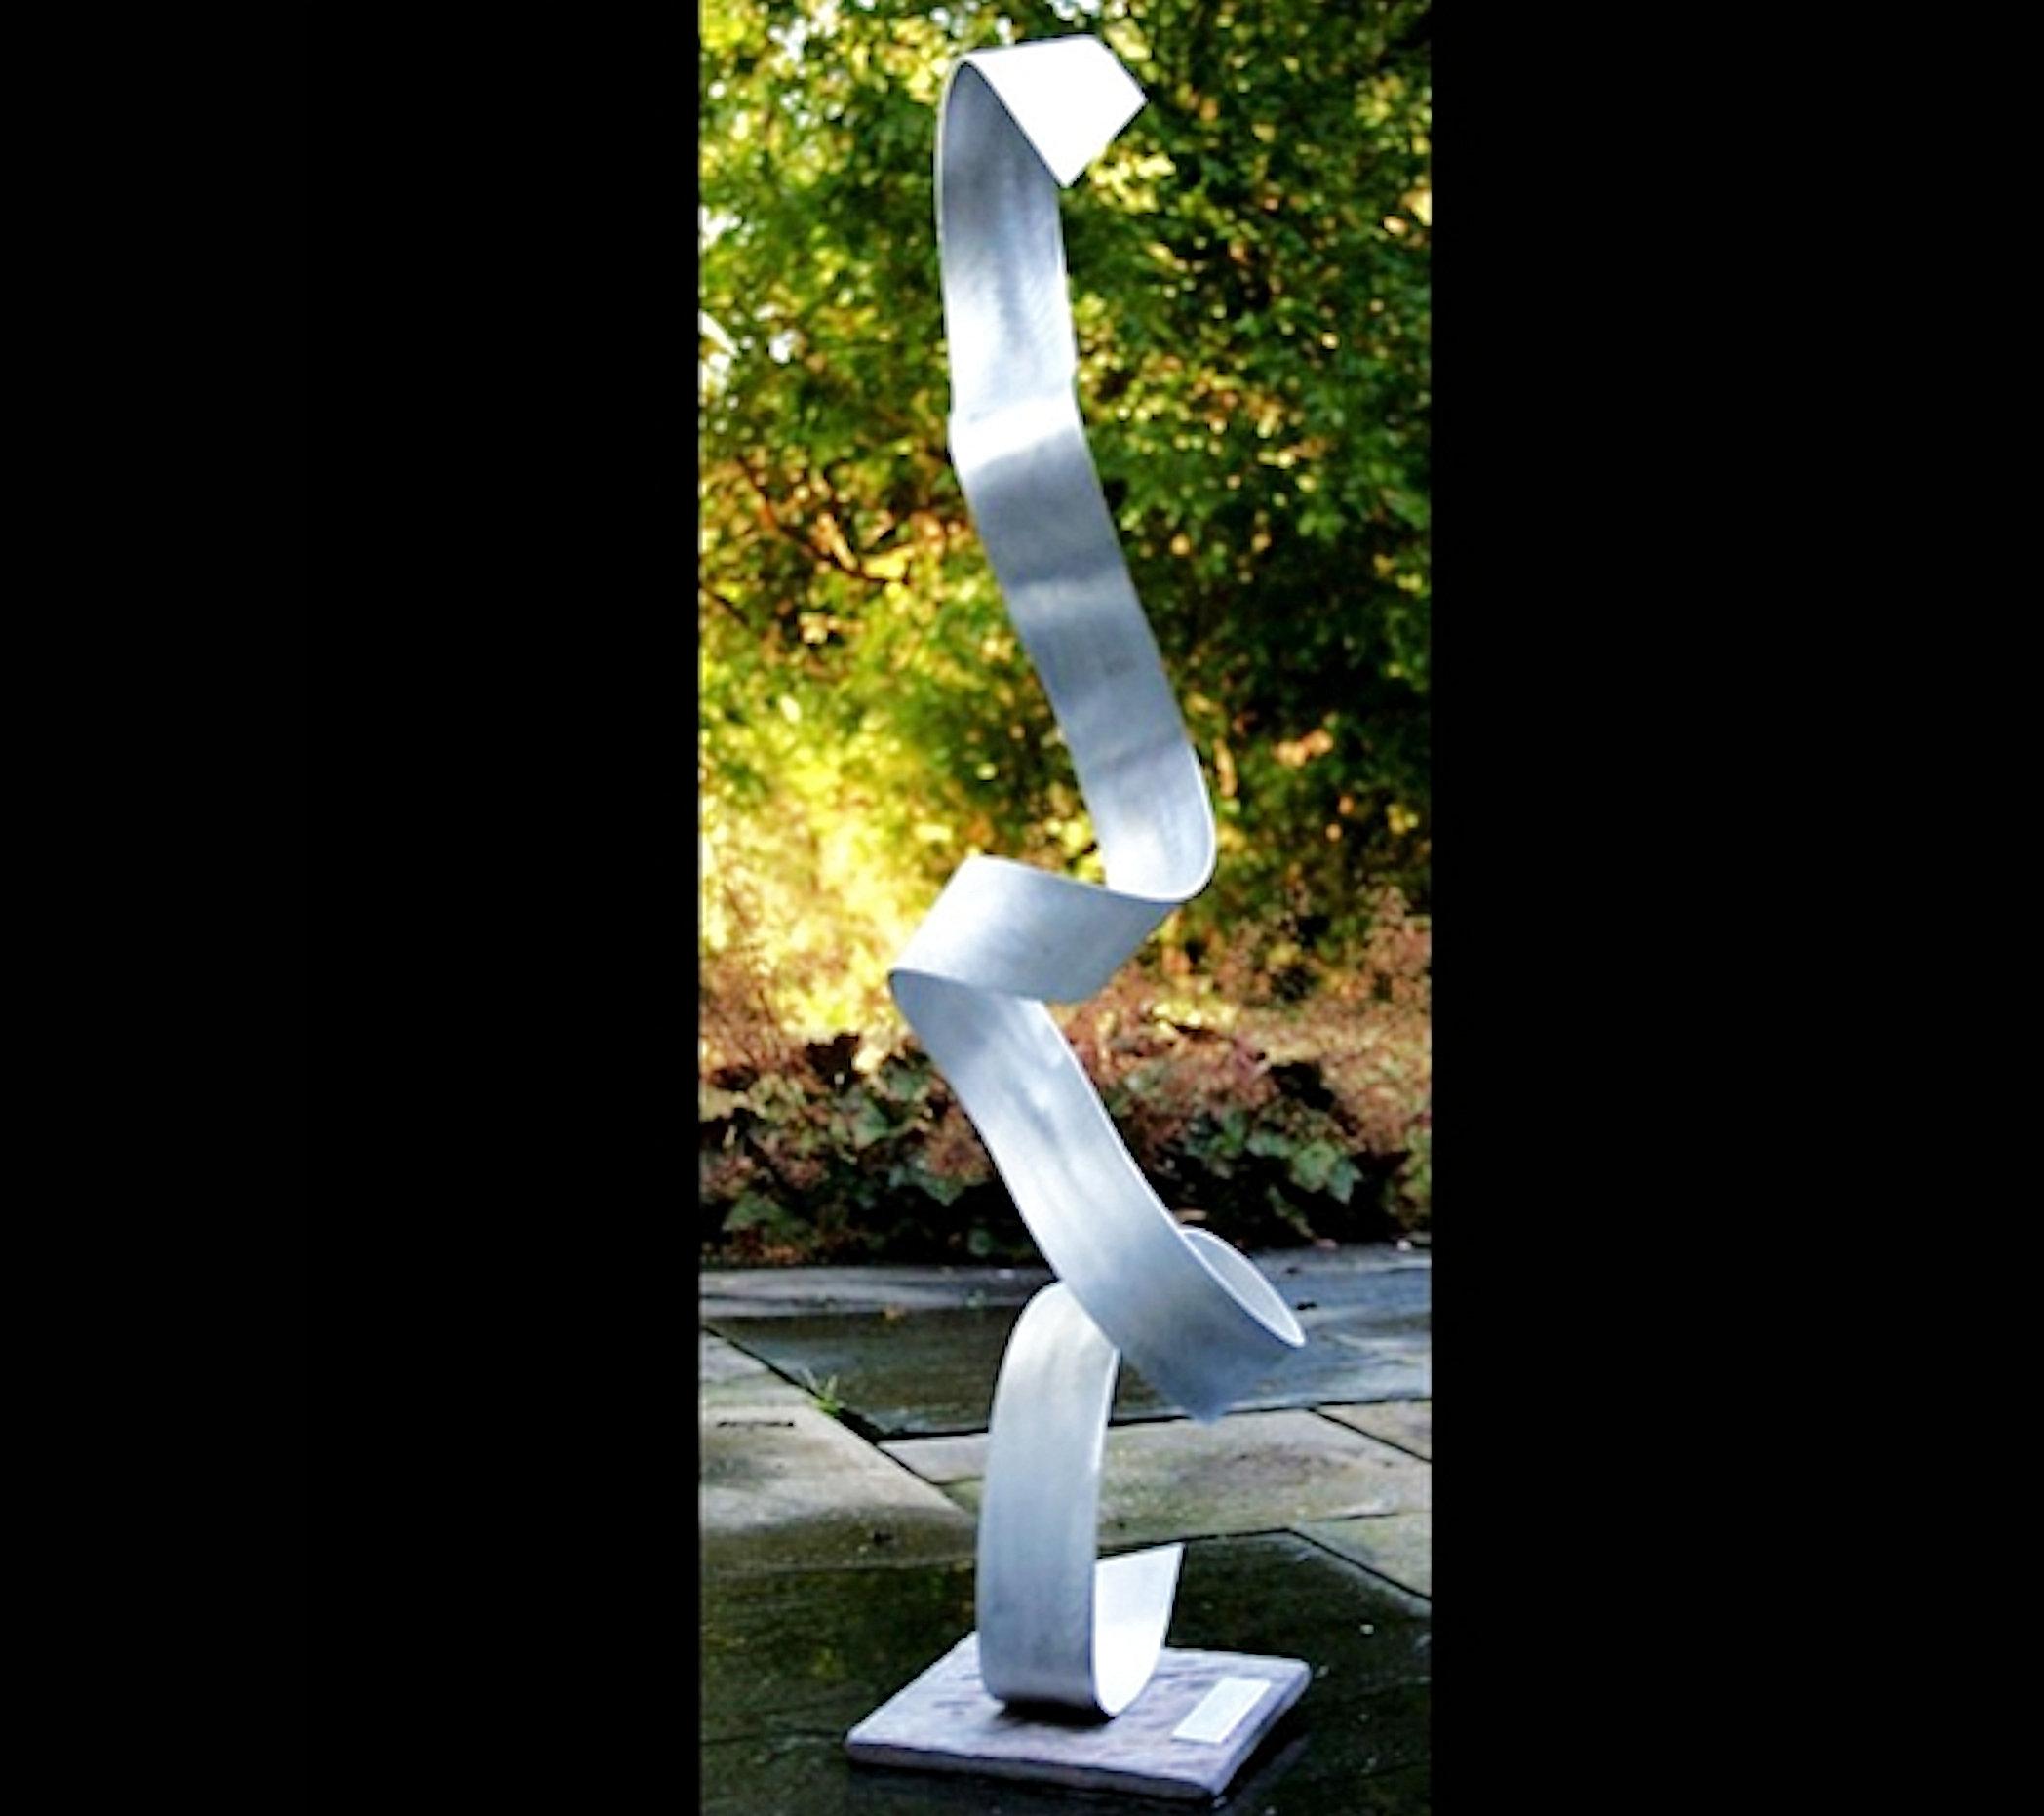 Sebastian Reiter Abstract Sculpture - Metal Yard Garden Art Industrial Contemporary Modern Sculpture Indoor Outdoor